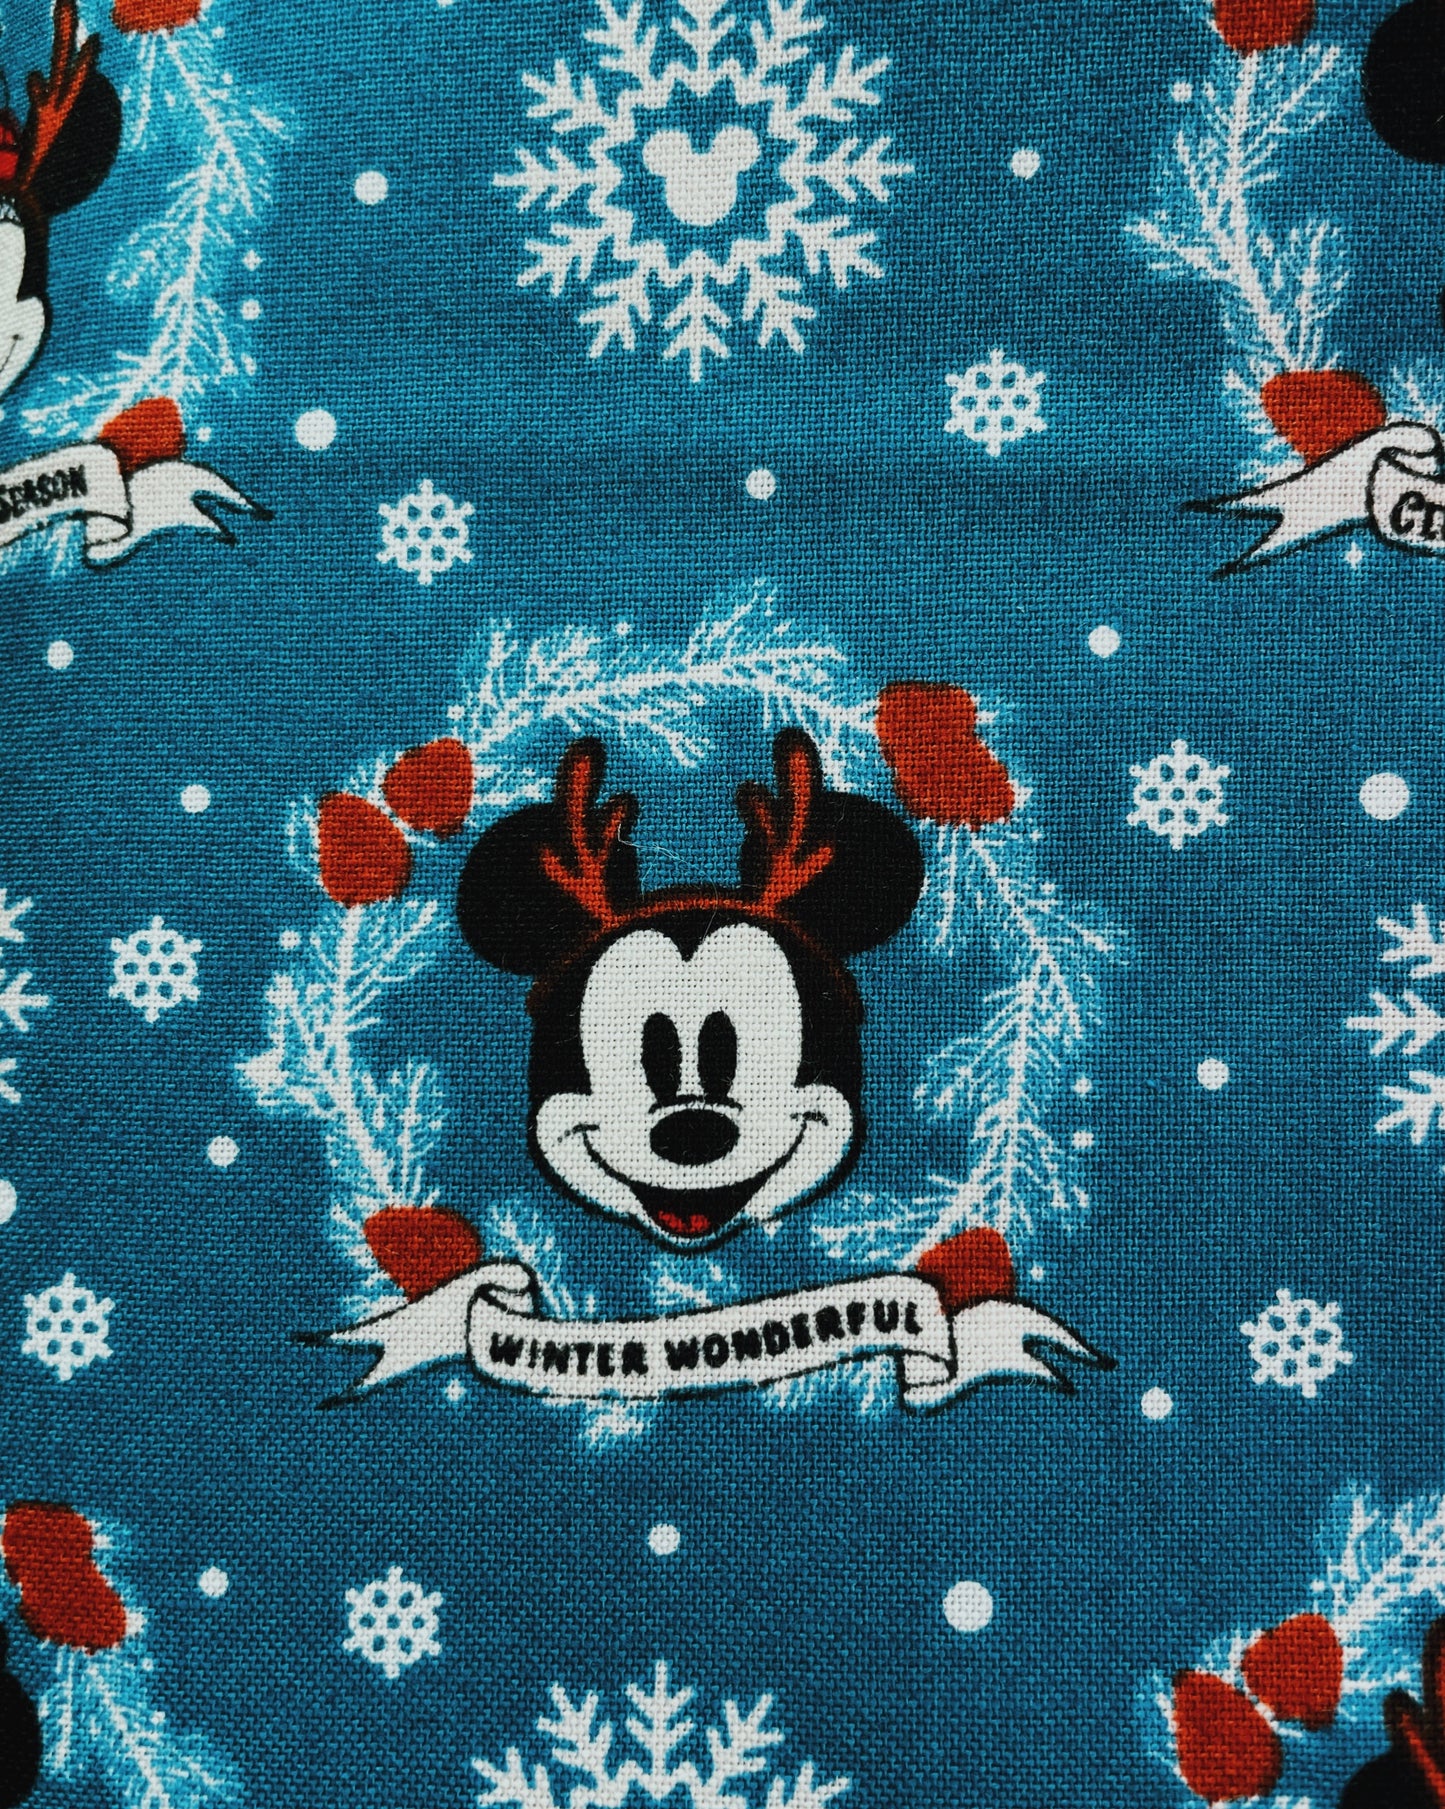 Mickey winter wonderland